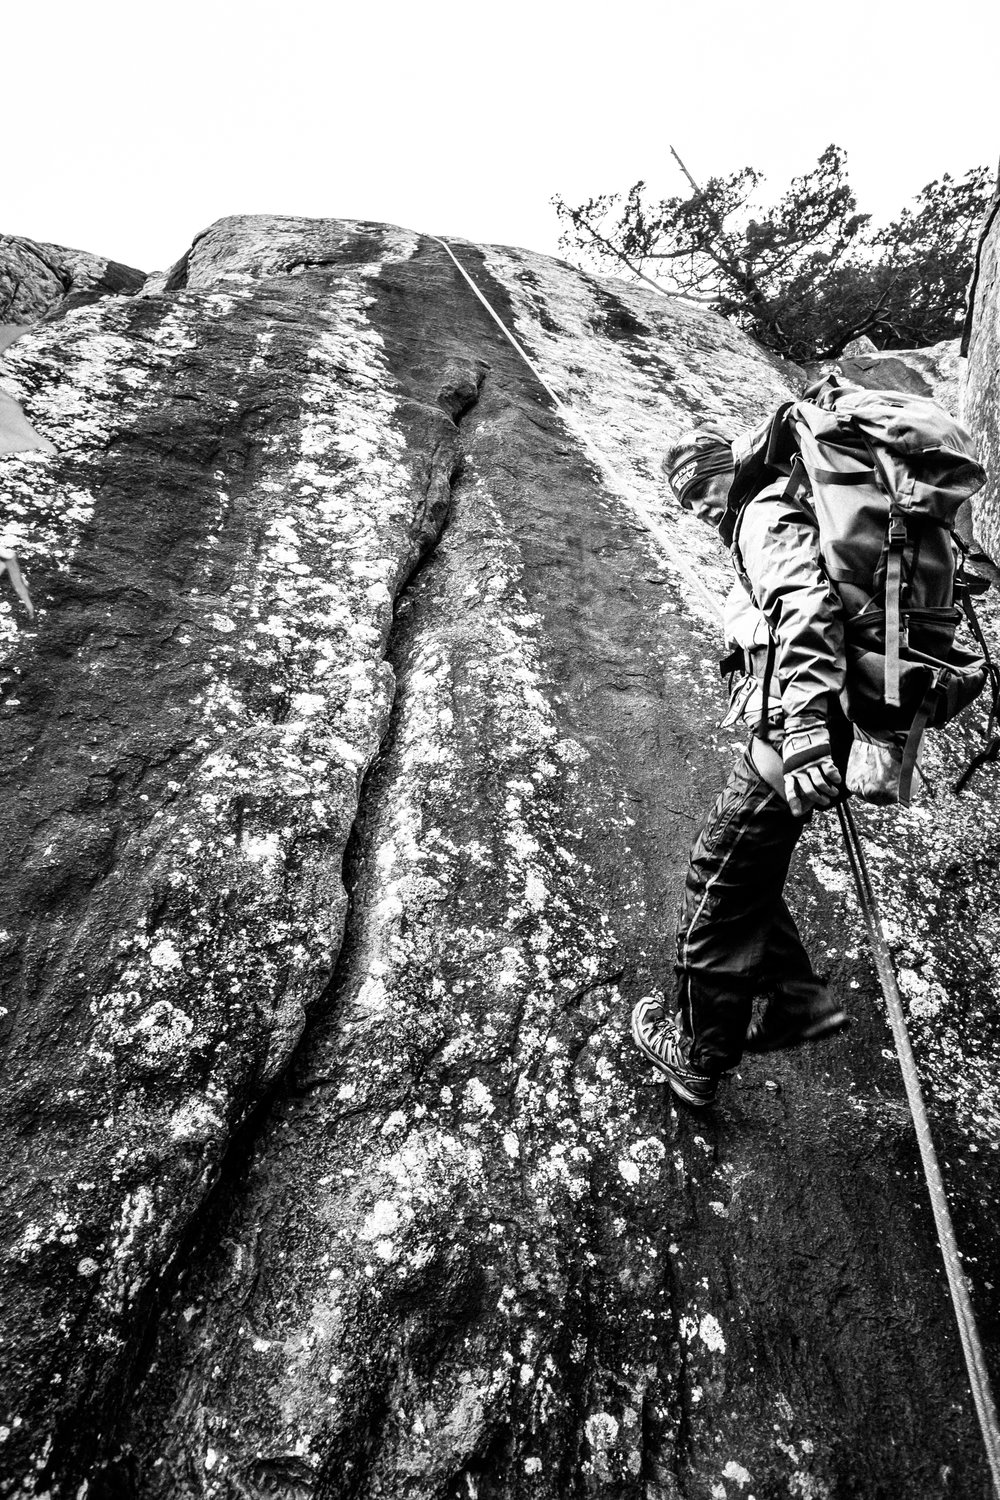 4-22-17 Rock Climbing black & white-7.jpg